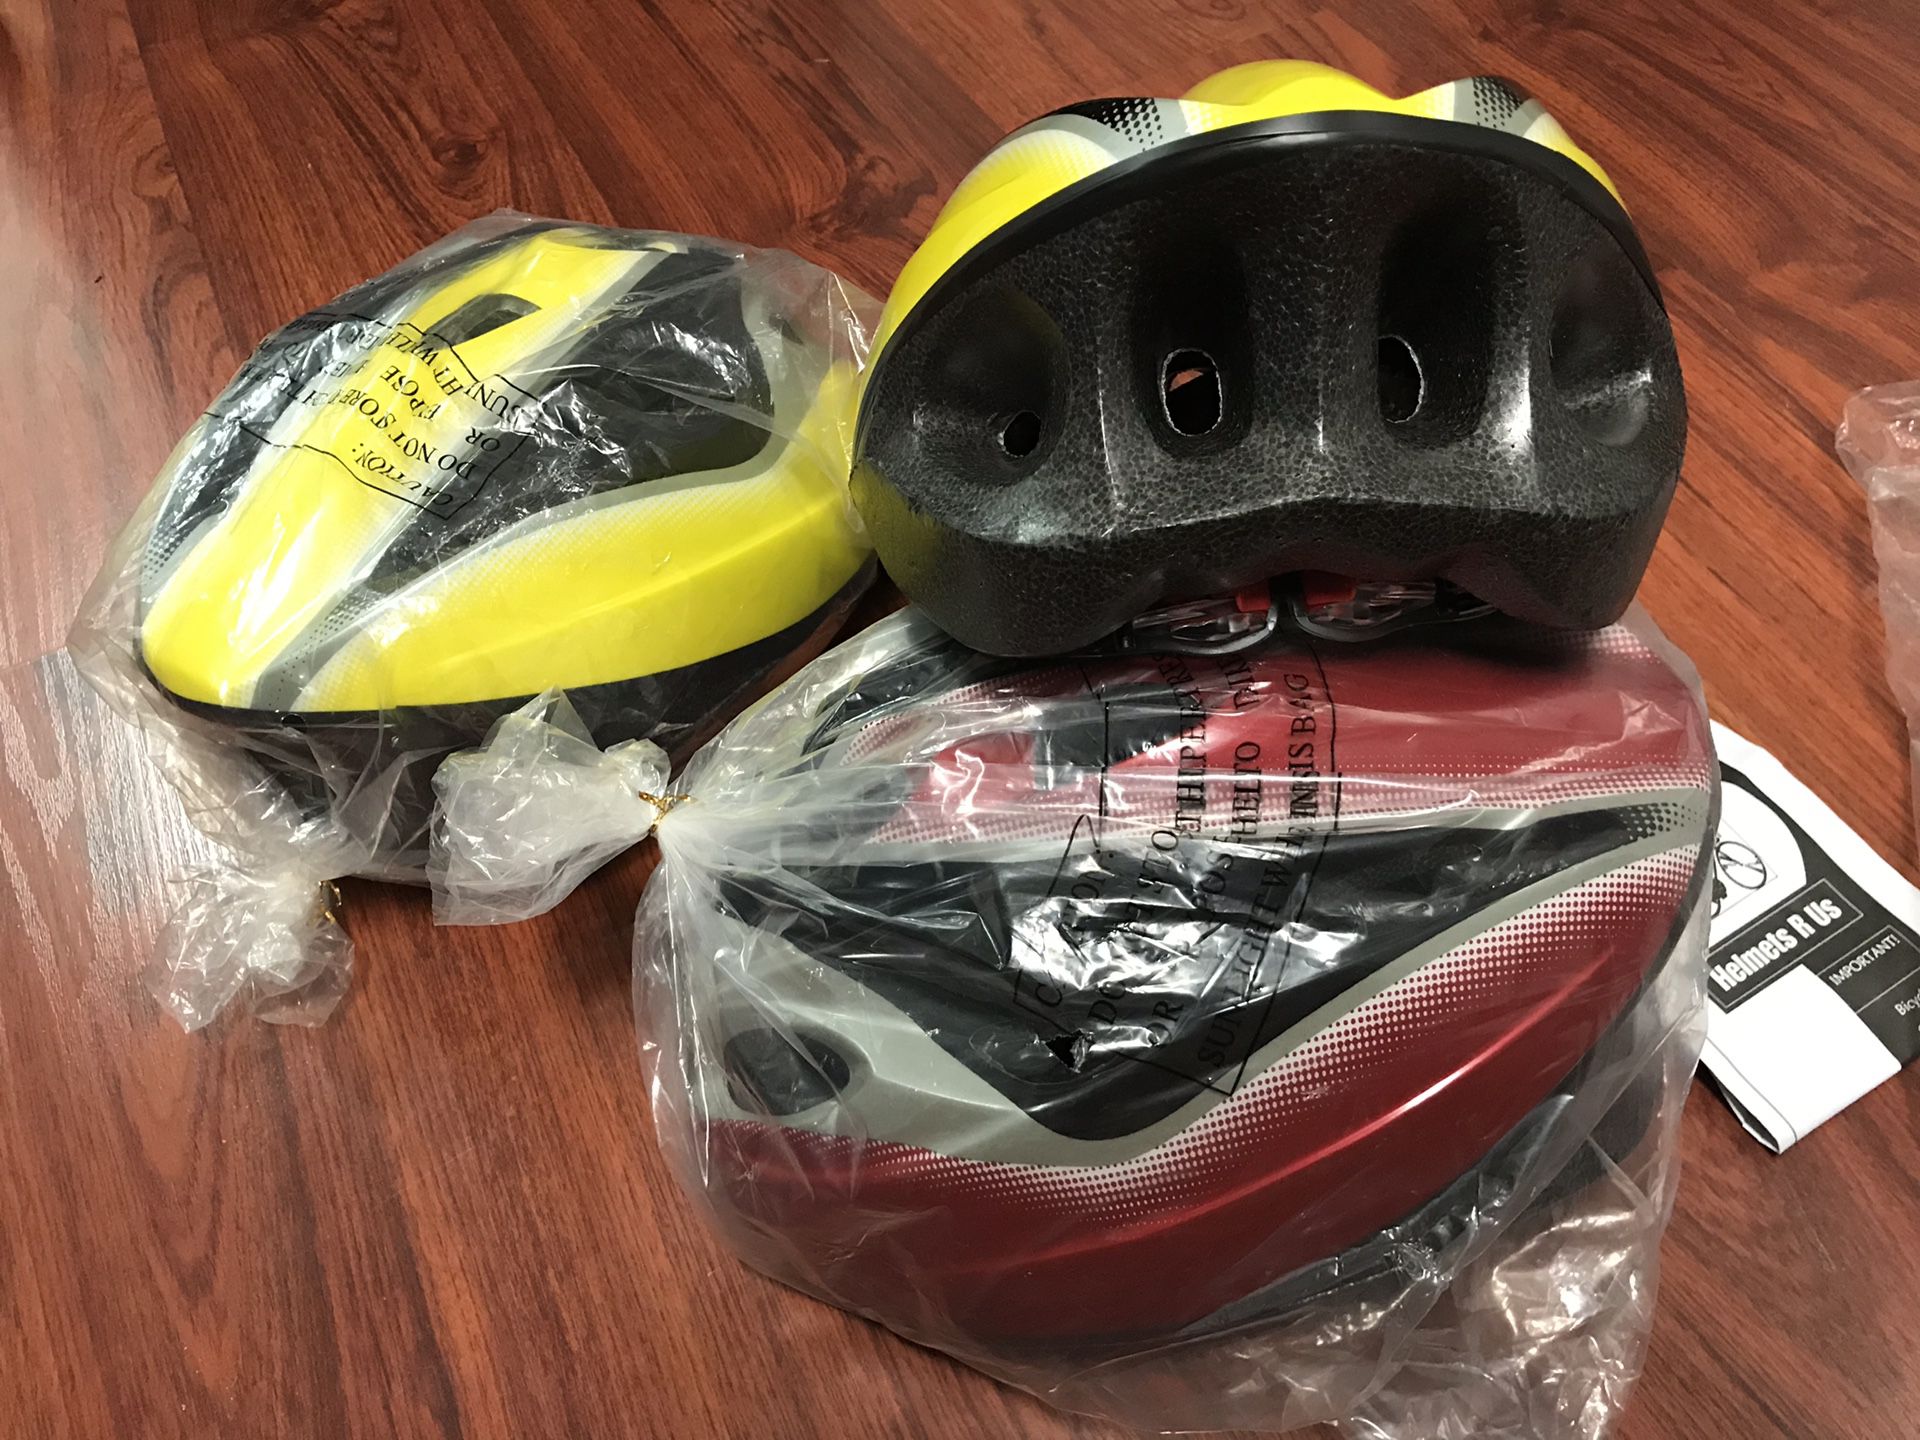 Brand New Helmets $9 each